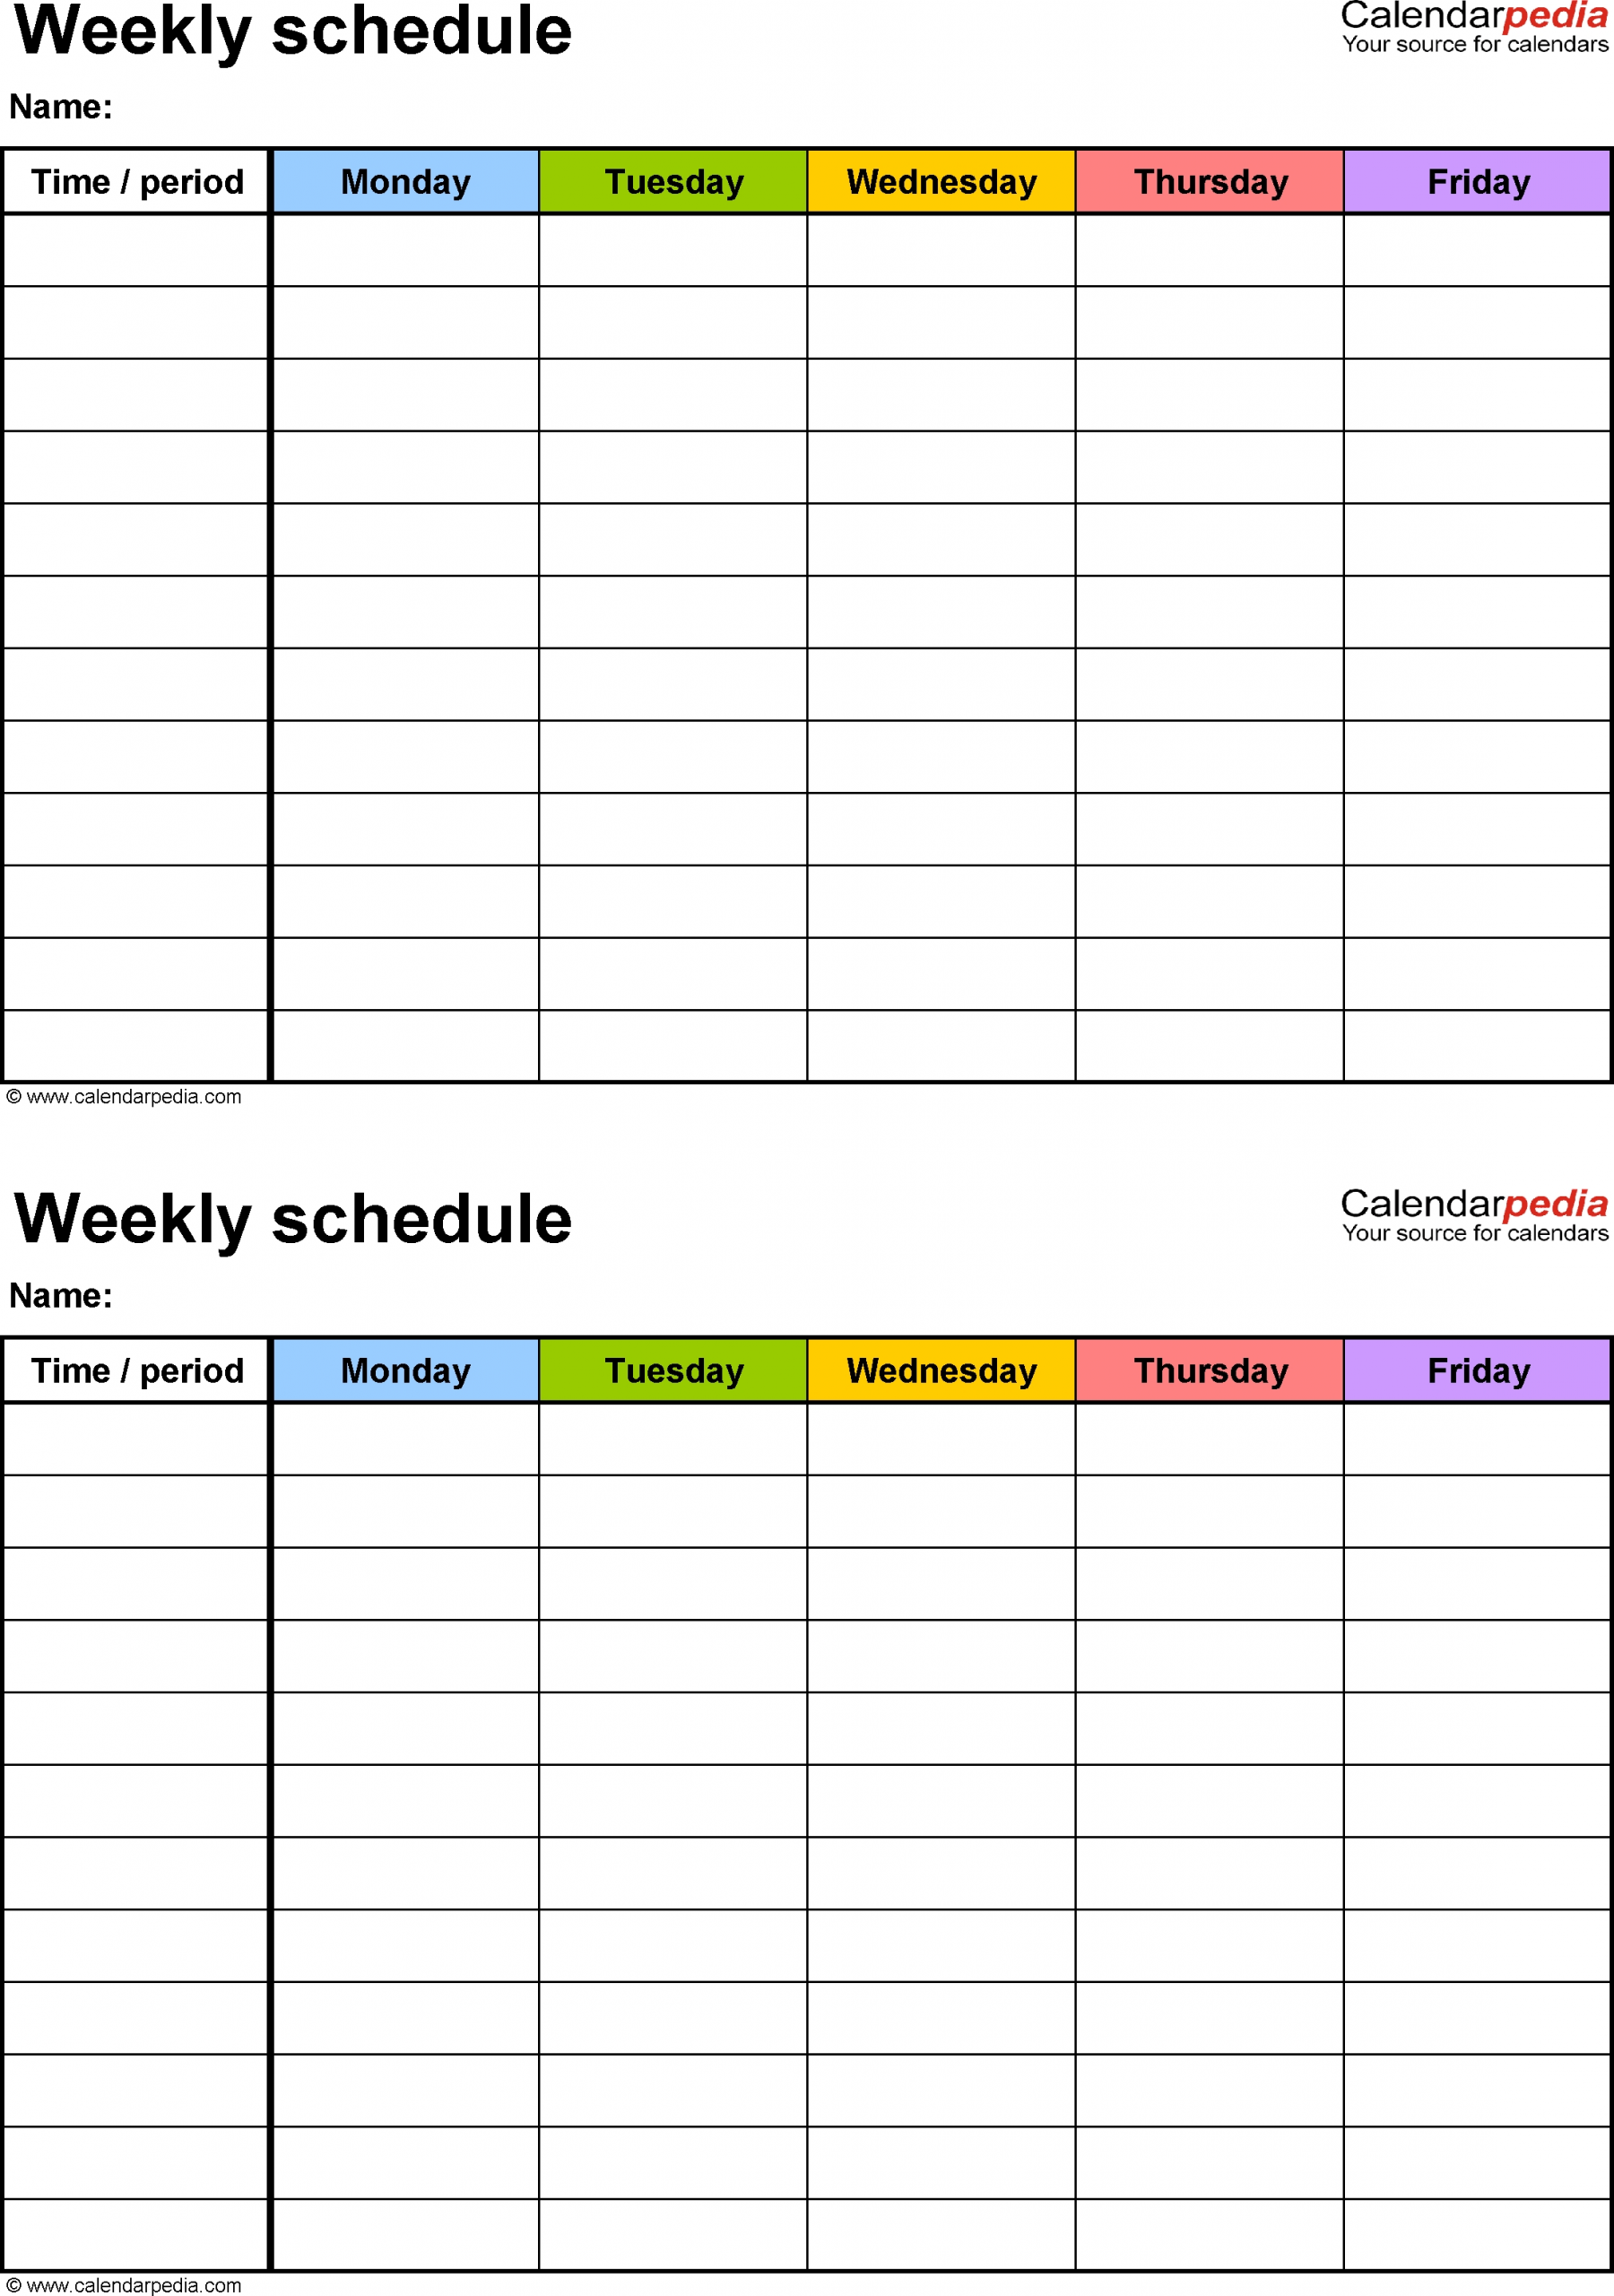 Get Printable Schedule Payments Calendar